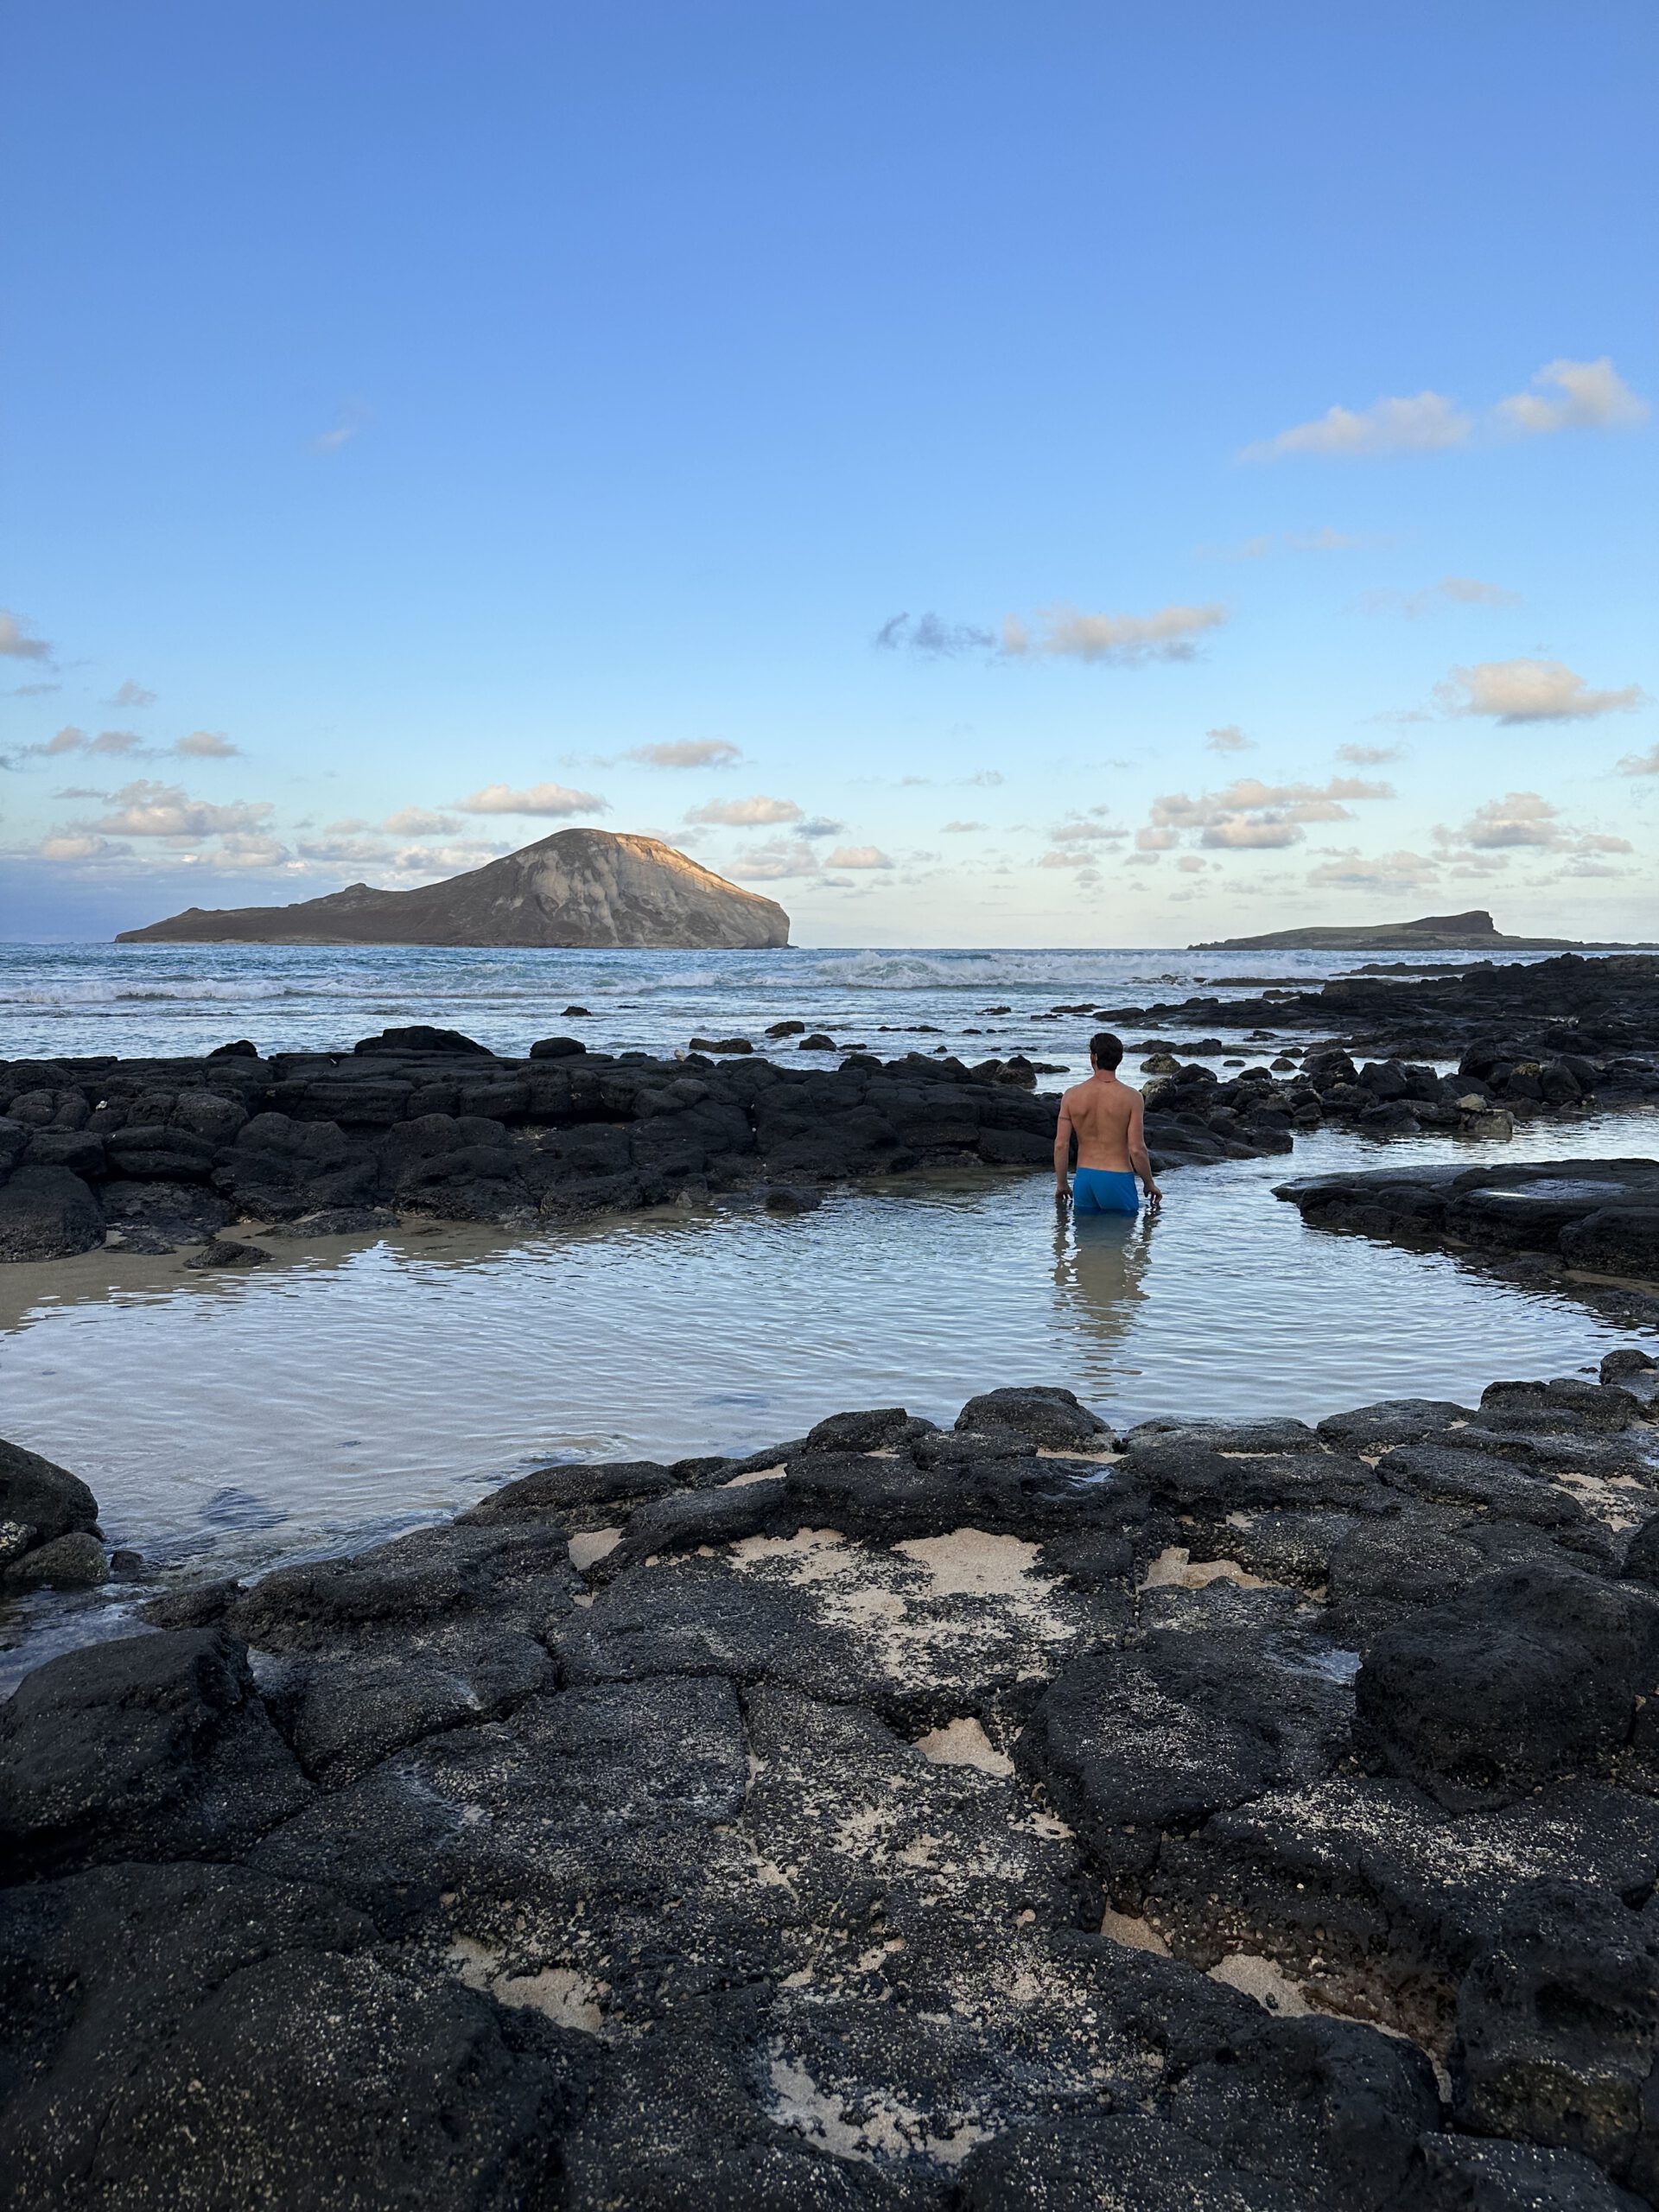 Swimming in tidal pools in Waimanalo on the island of Oahu